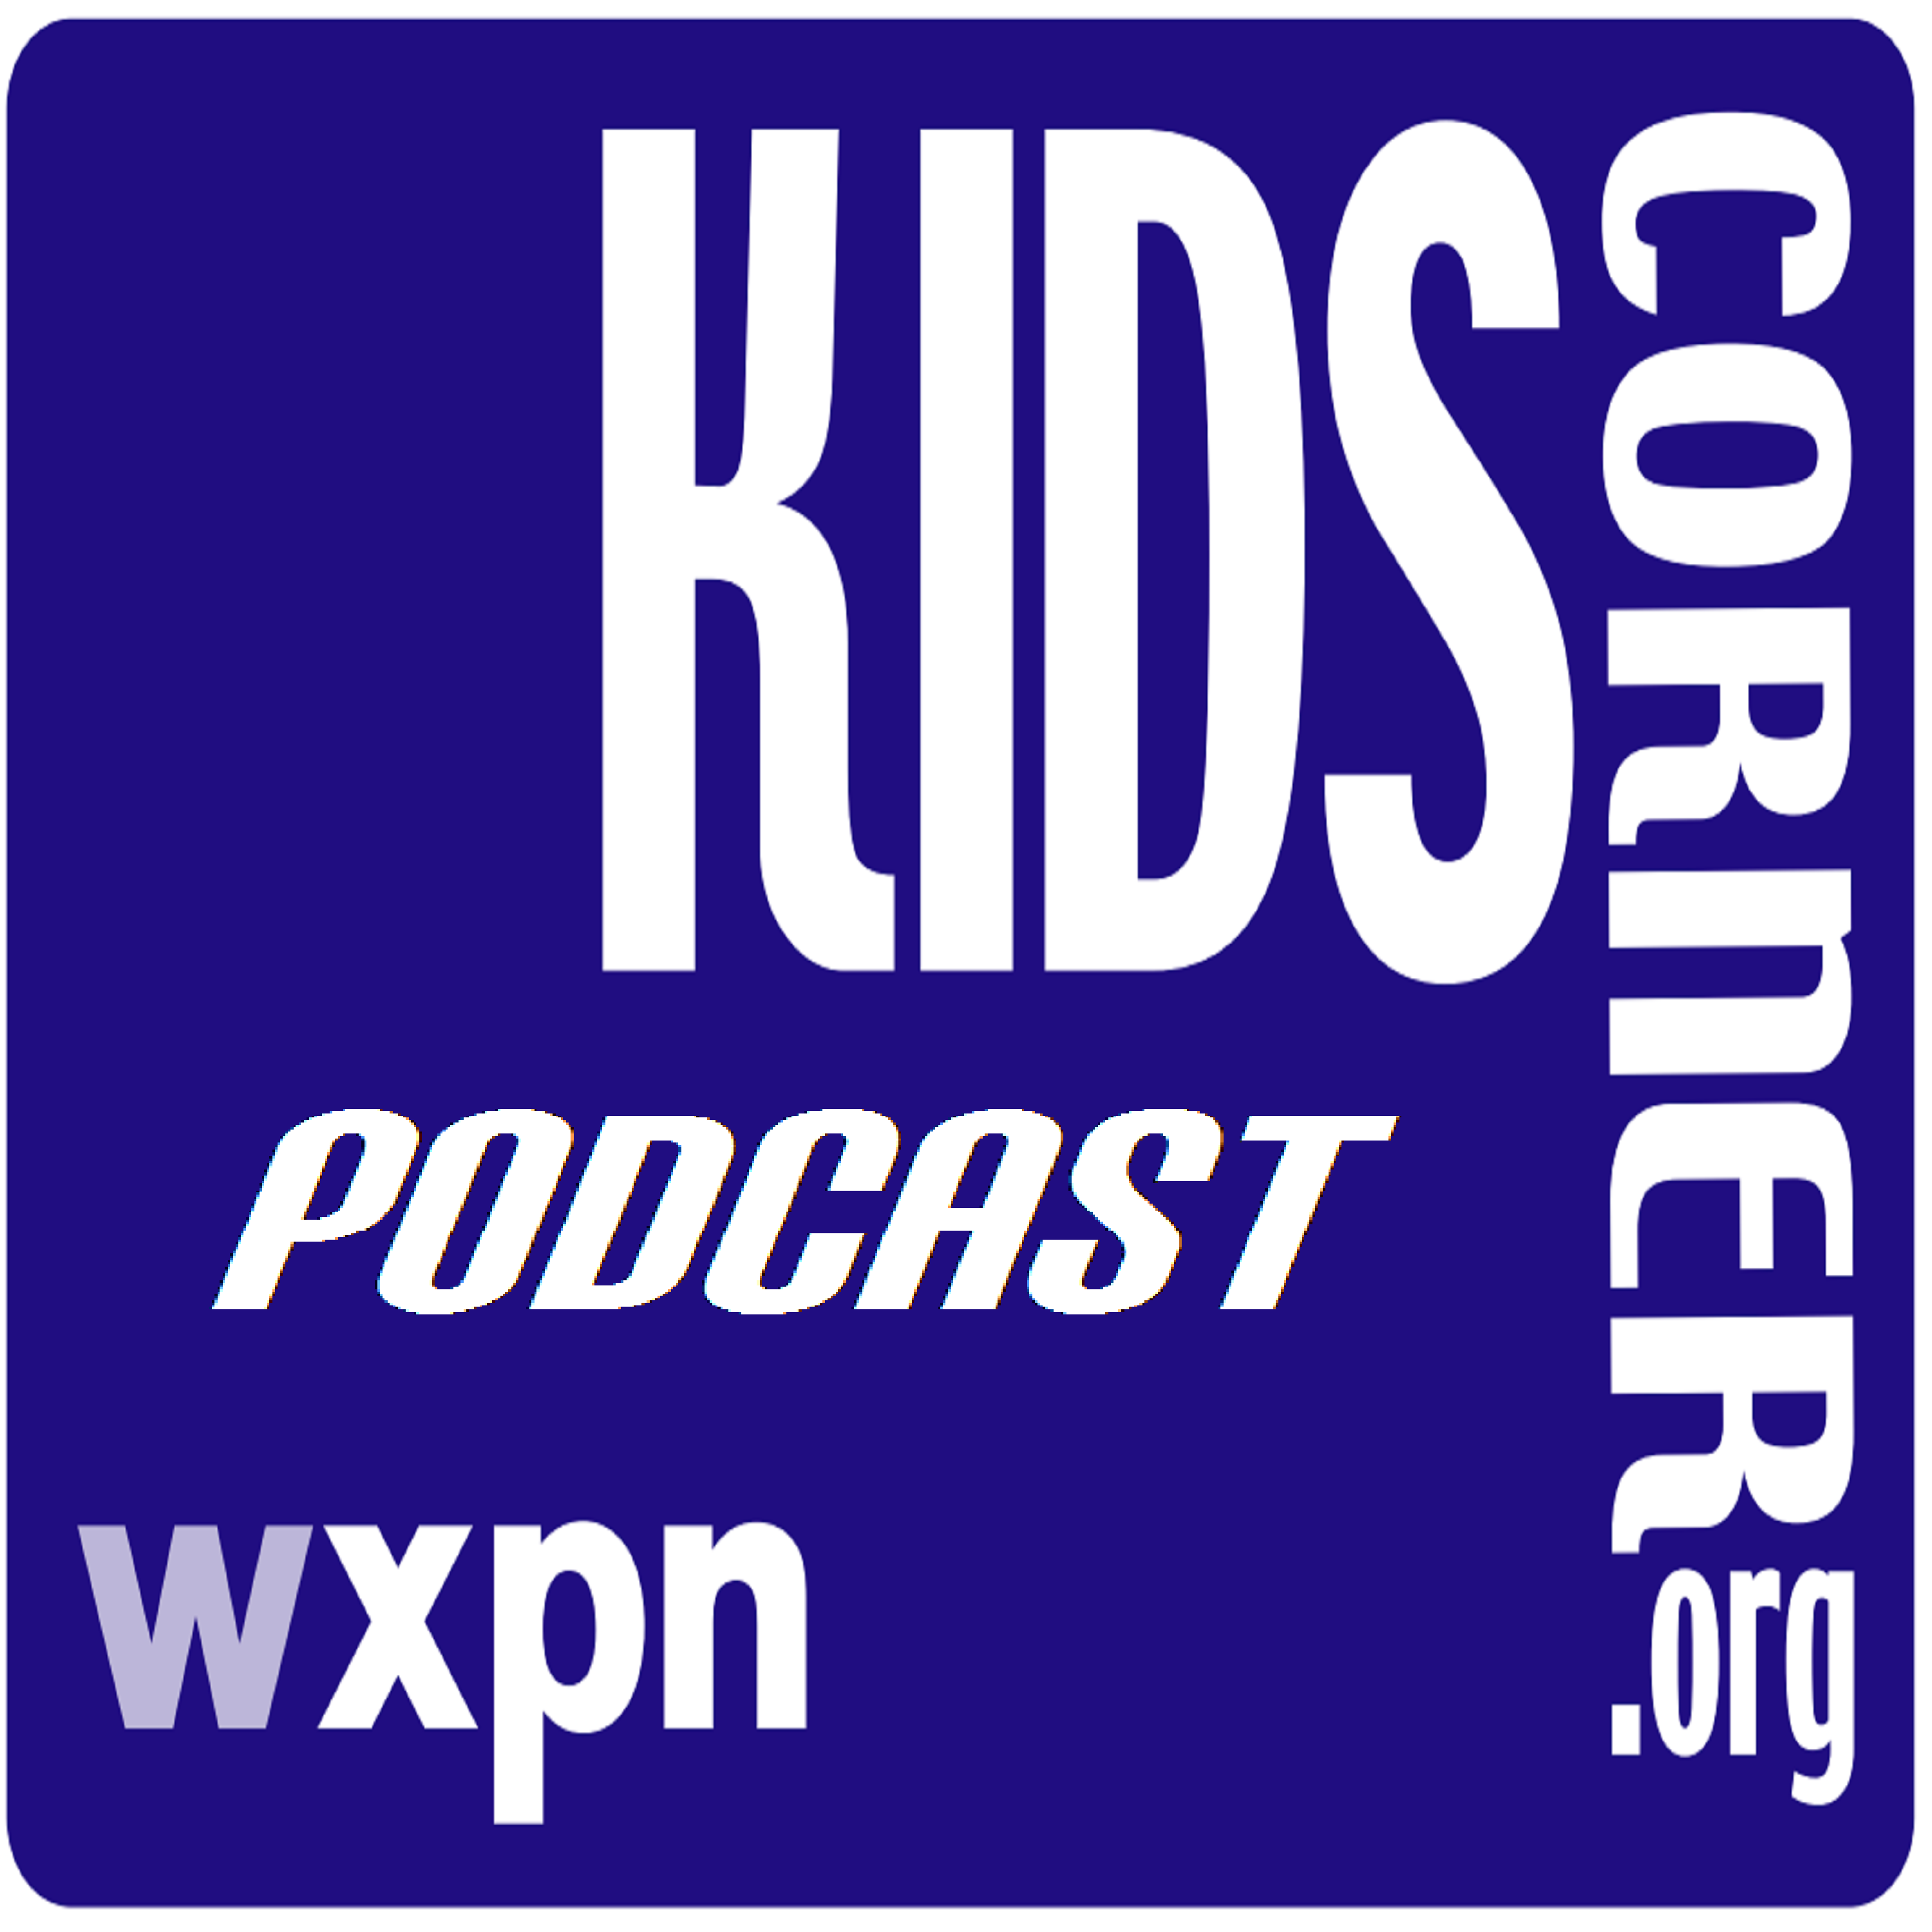 Kids Corner Podcast on XPN